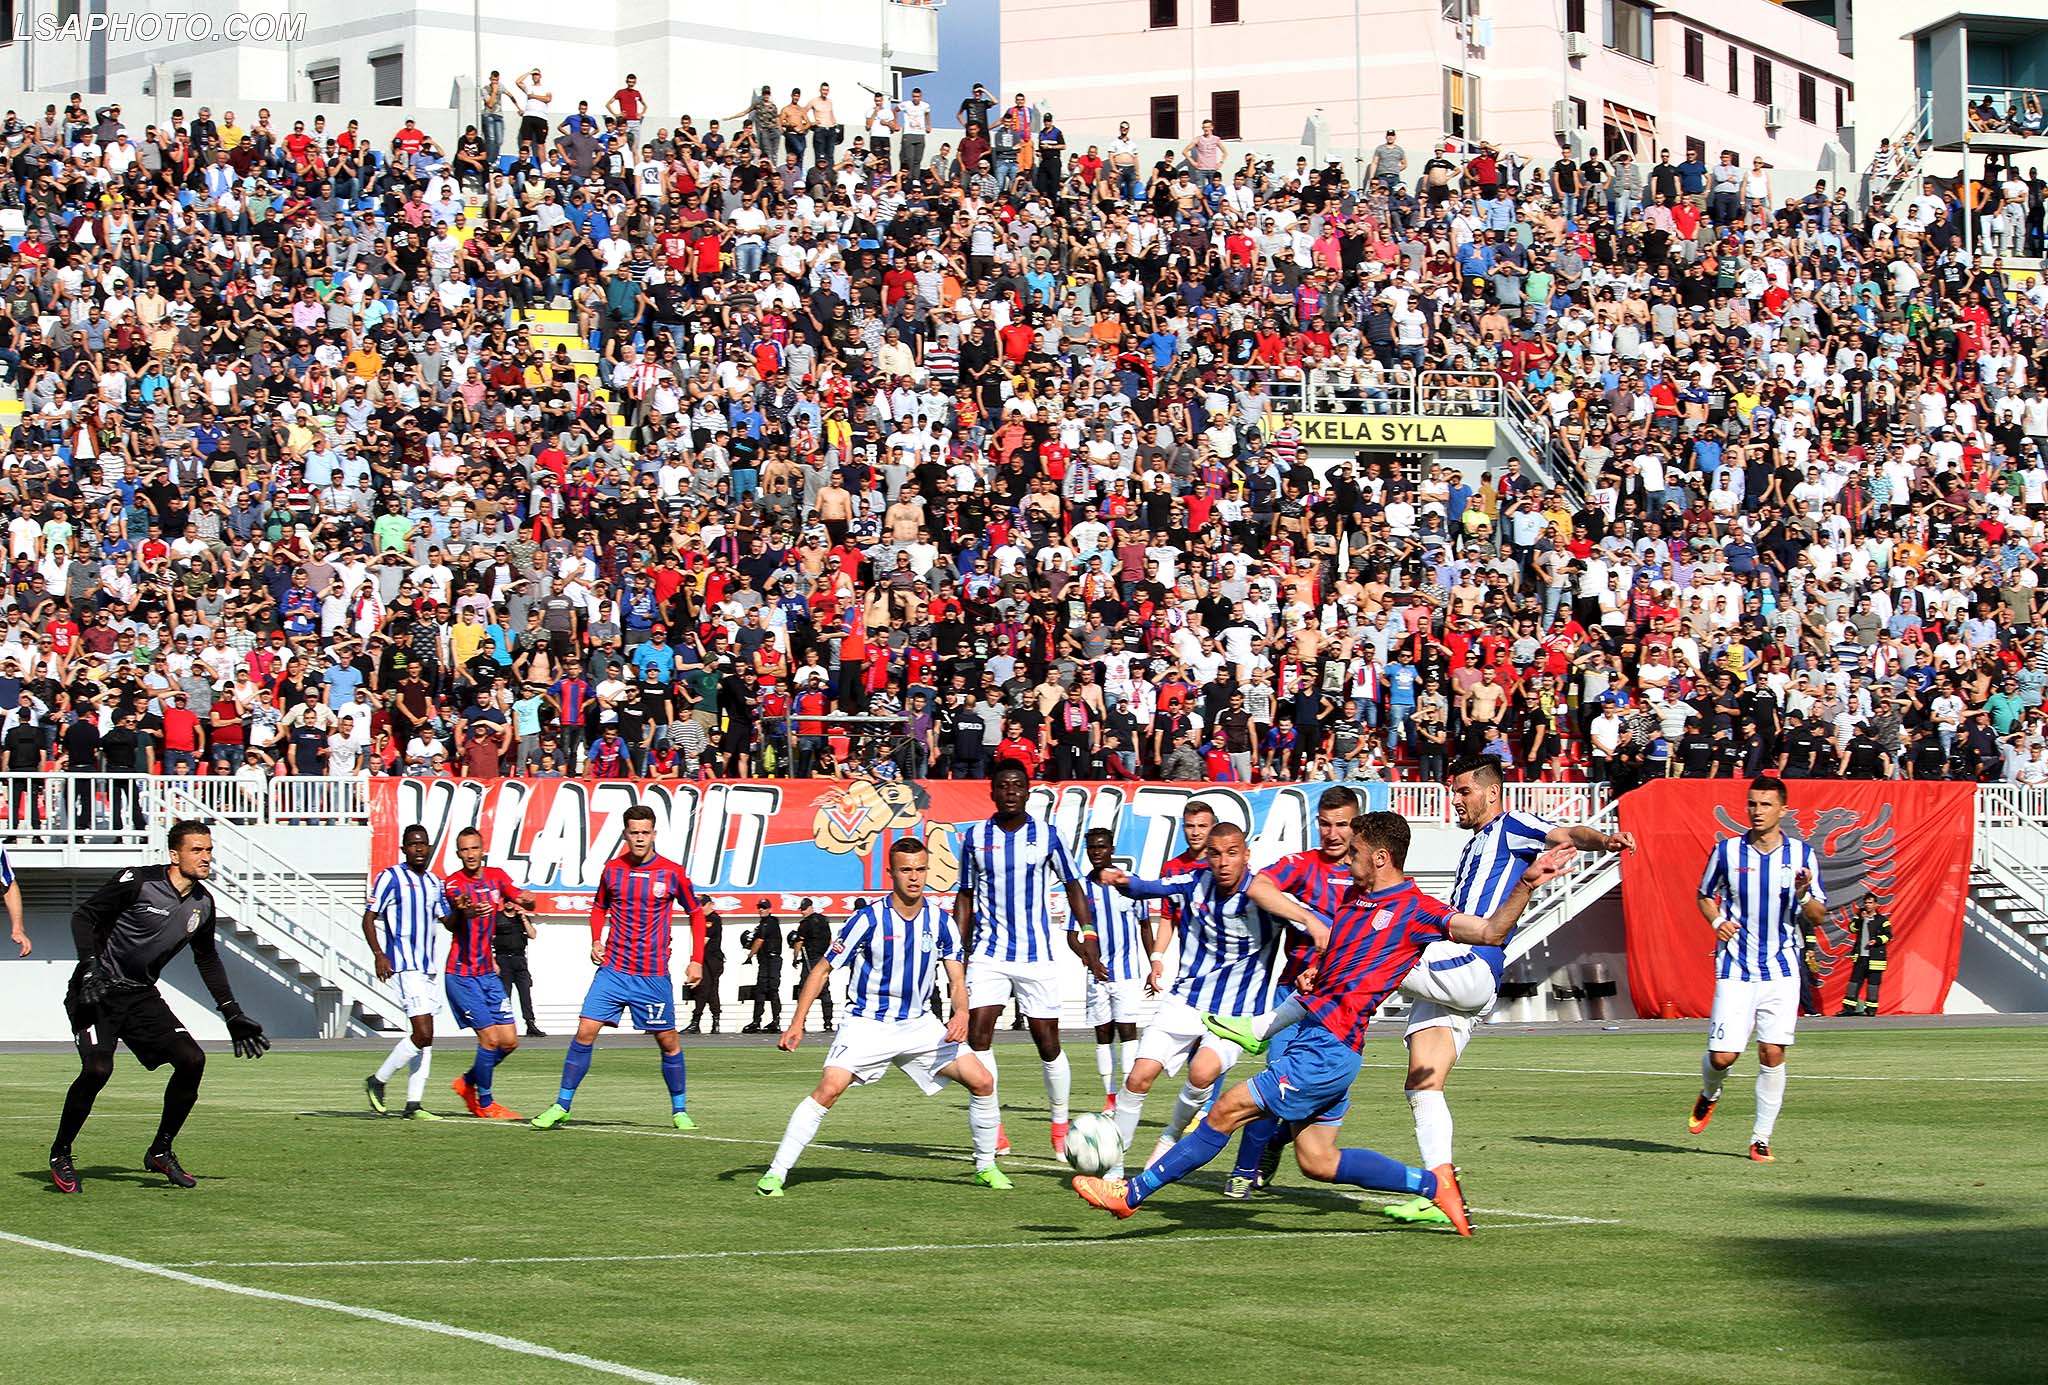 Ndeshja e futbollit, Vllaznia-Tirana, 0-0, e vlefshme per Kampionatin Kombetar, luajtur ne stadiumin Loro Borici, ne qytetin e Shkodres. Pas kesaj ndeshje Vllaznia qendron ne Kategorine Superiore ndersa Tirana zbret ne kategorine e pare./r/n/r/nAlbanian Super League football match Vllaznia vs Tirana, which ended 0-0, at the Loro Borici stadium in city of Shkoder. The draw means Vllaznia's stays at Super League and FC Tirana is relegated in the second league for the first time in its history.